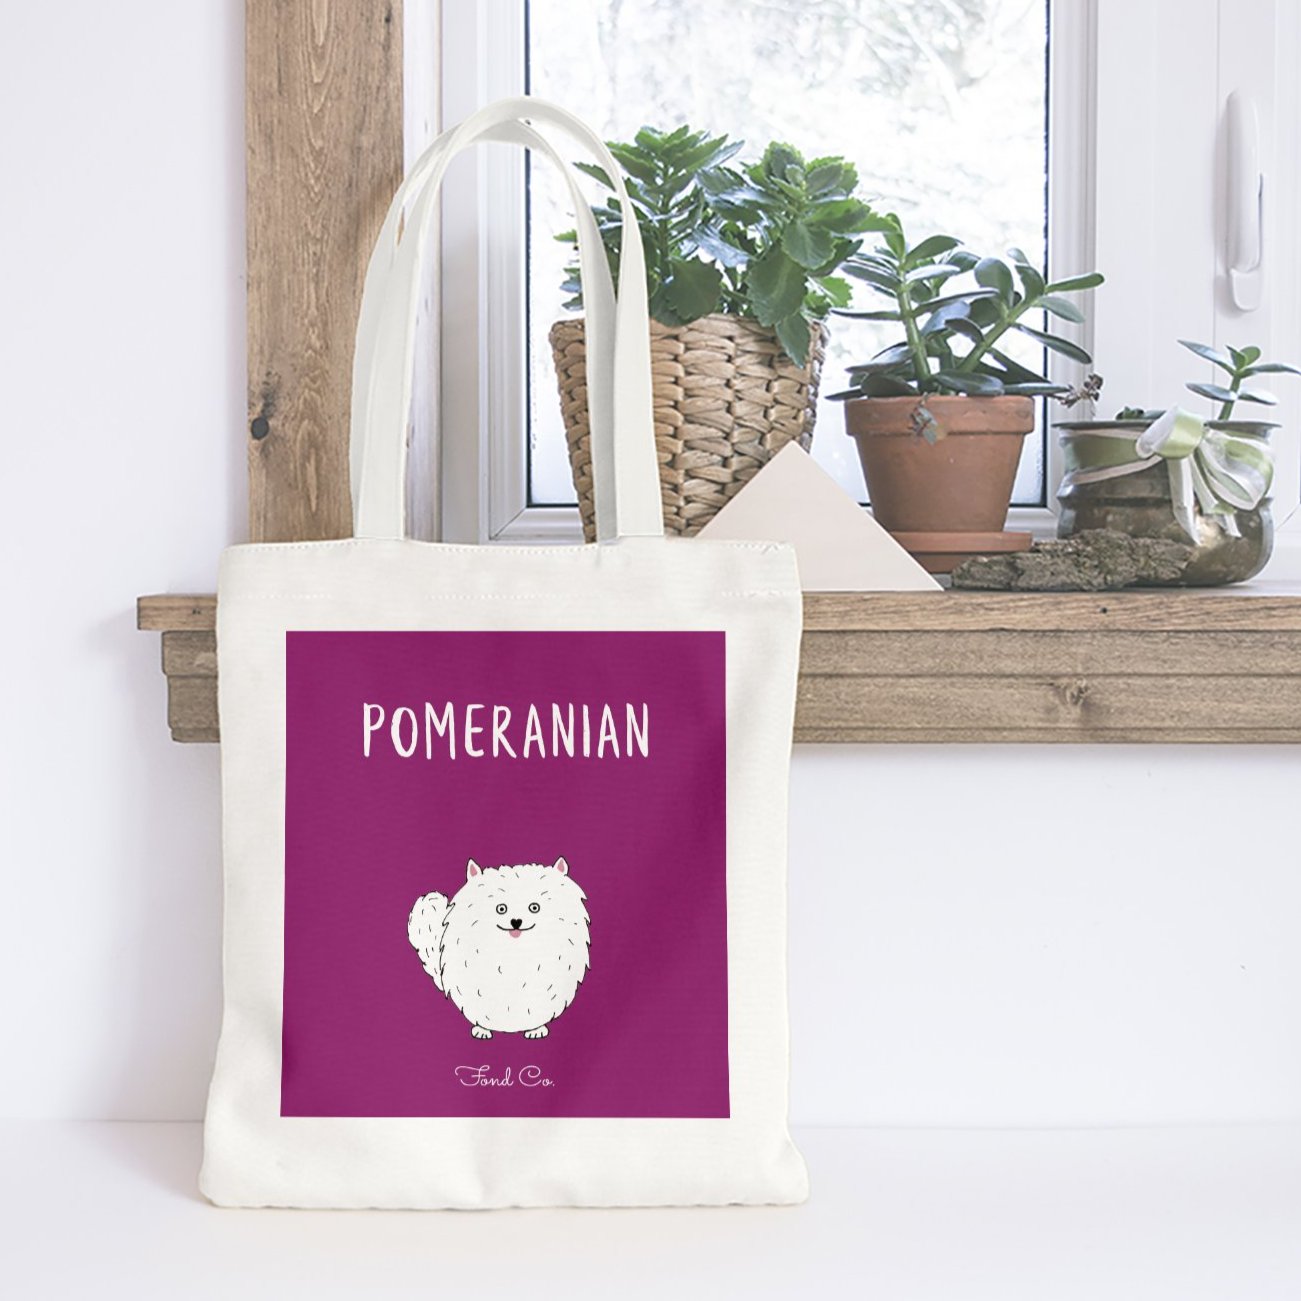 Pomeranian tote bag